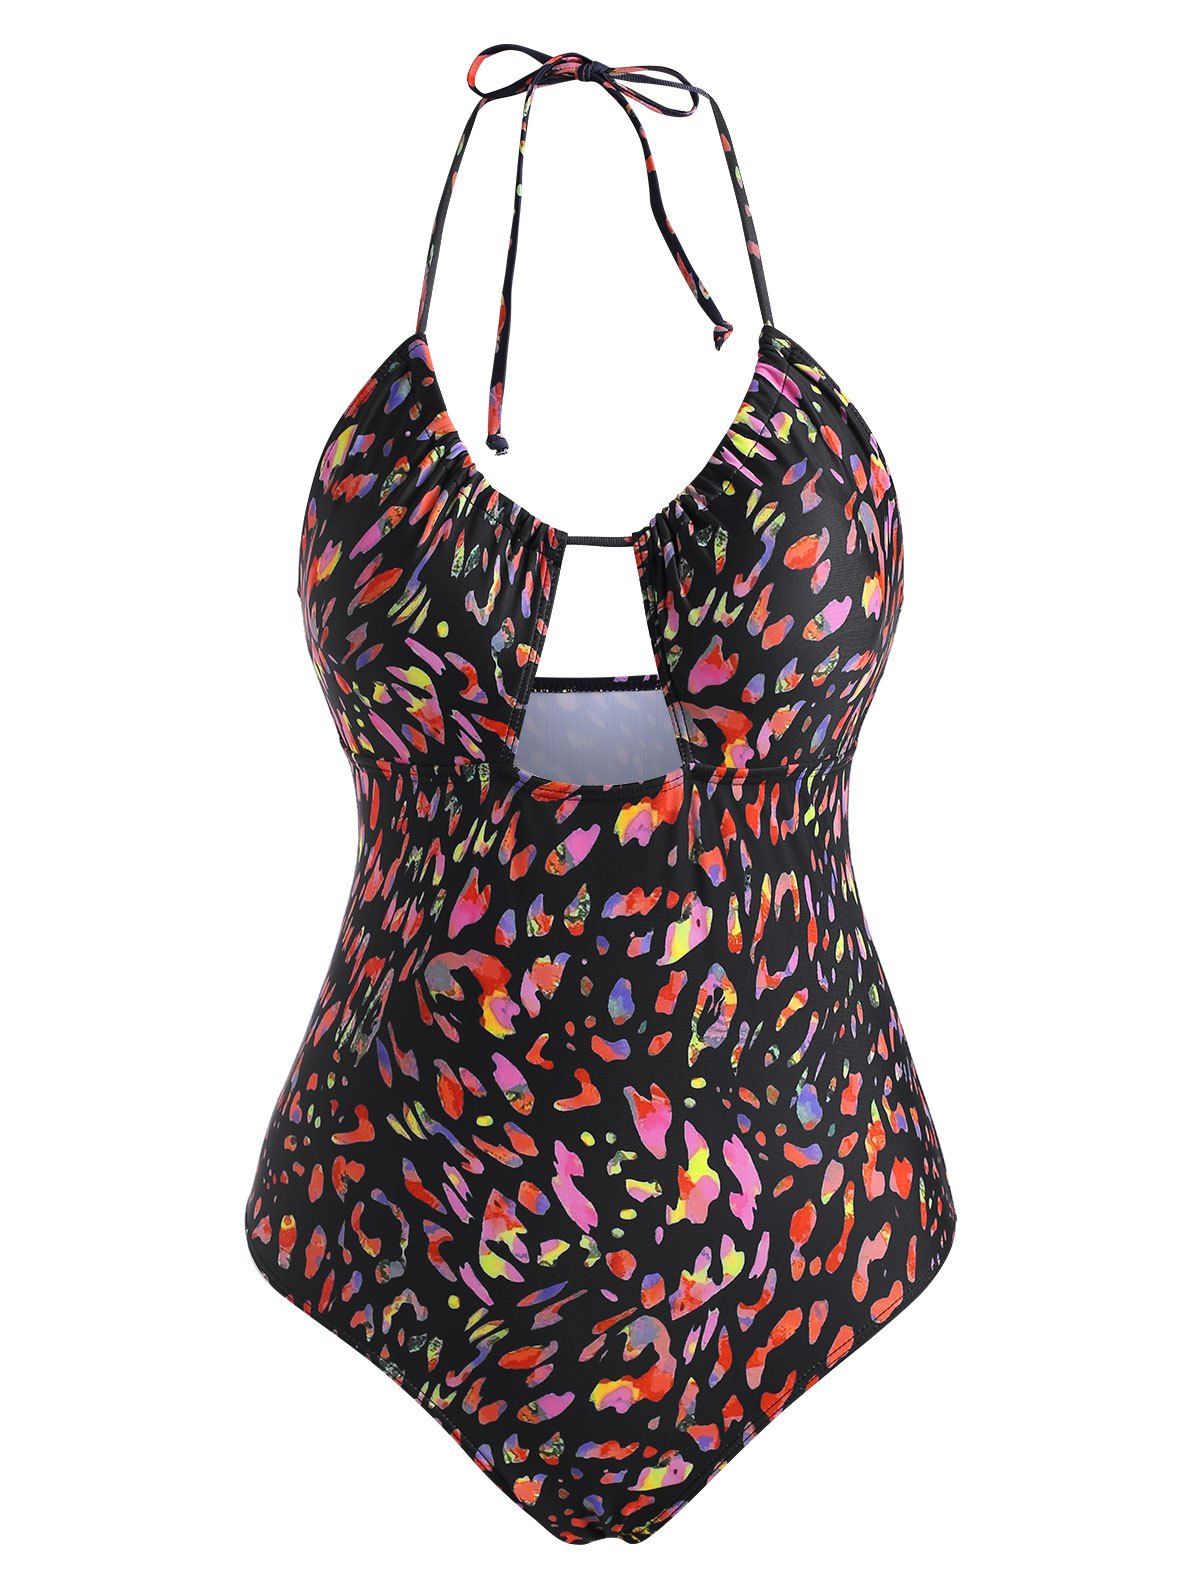 Leopard Print Cutout Cinched One-piece Swimwear - multicolor L